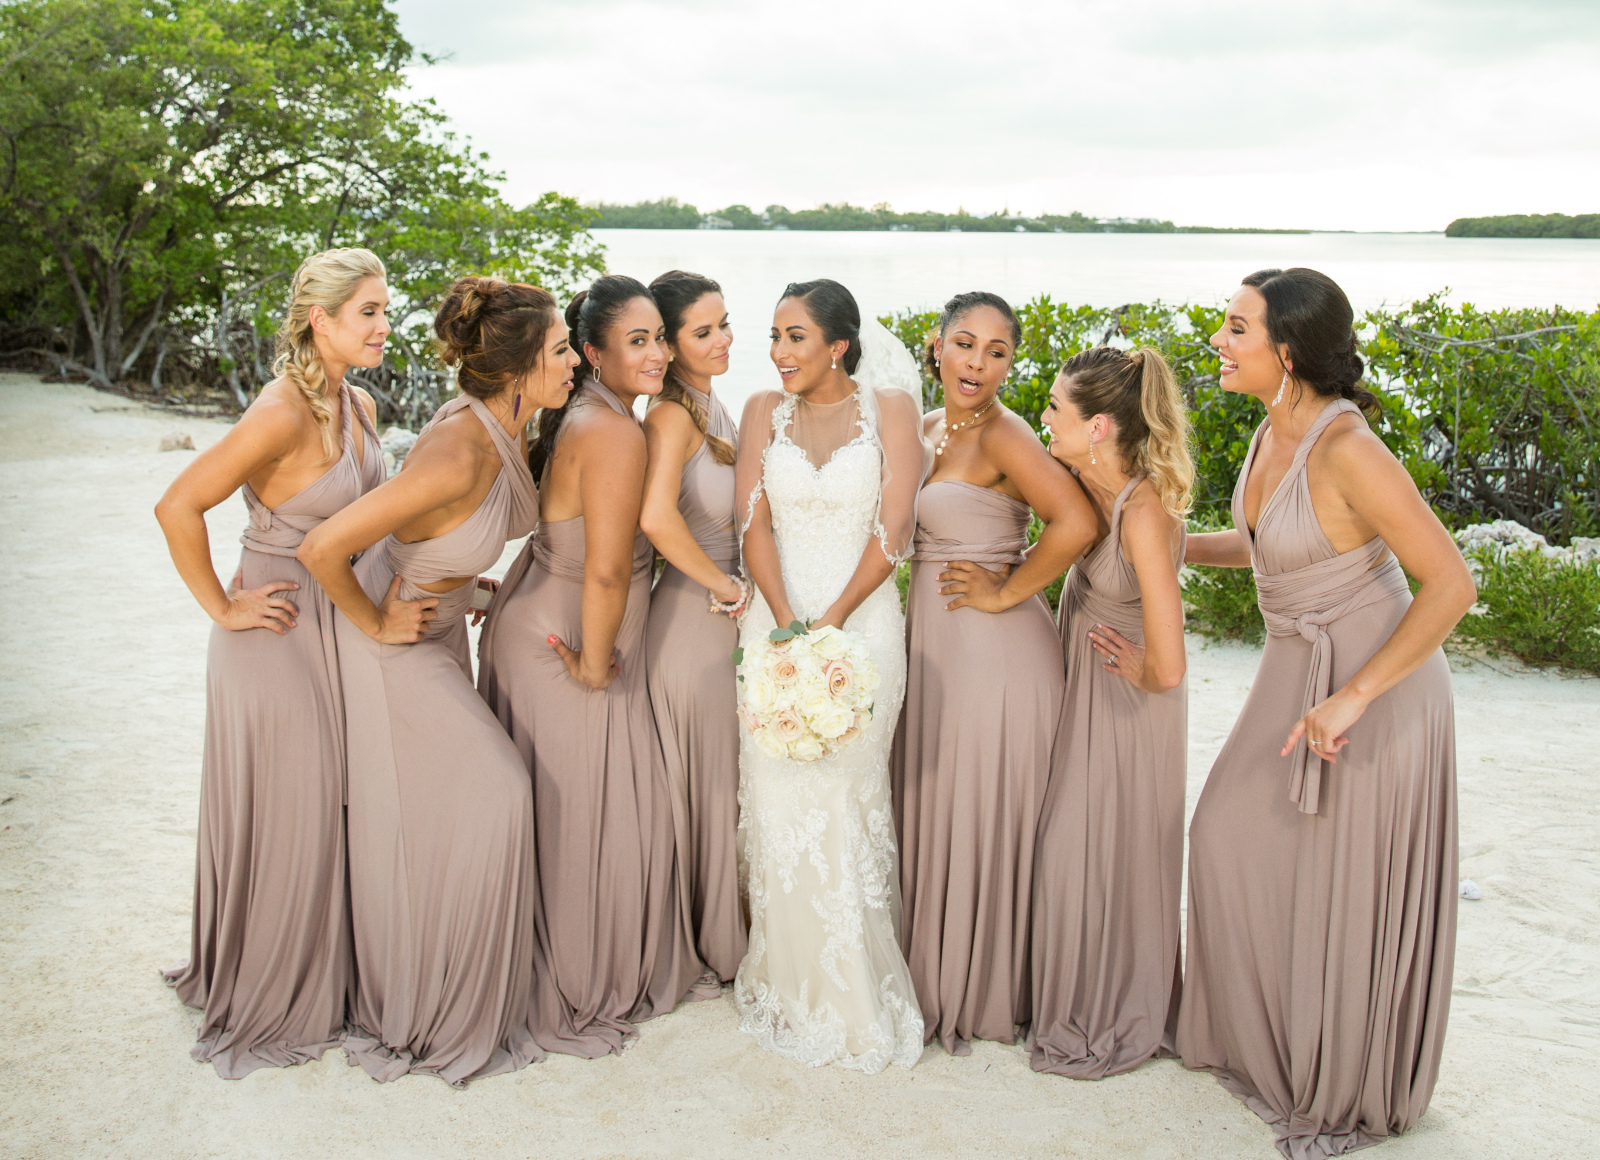 Beach Bridesmaid Dresses from Real Weddings - Destination Wedding